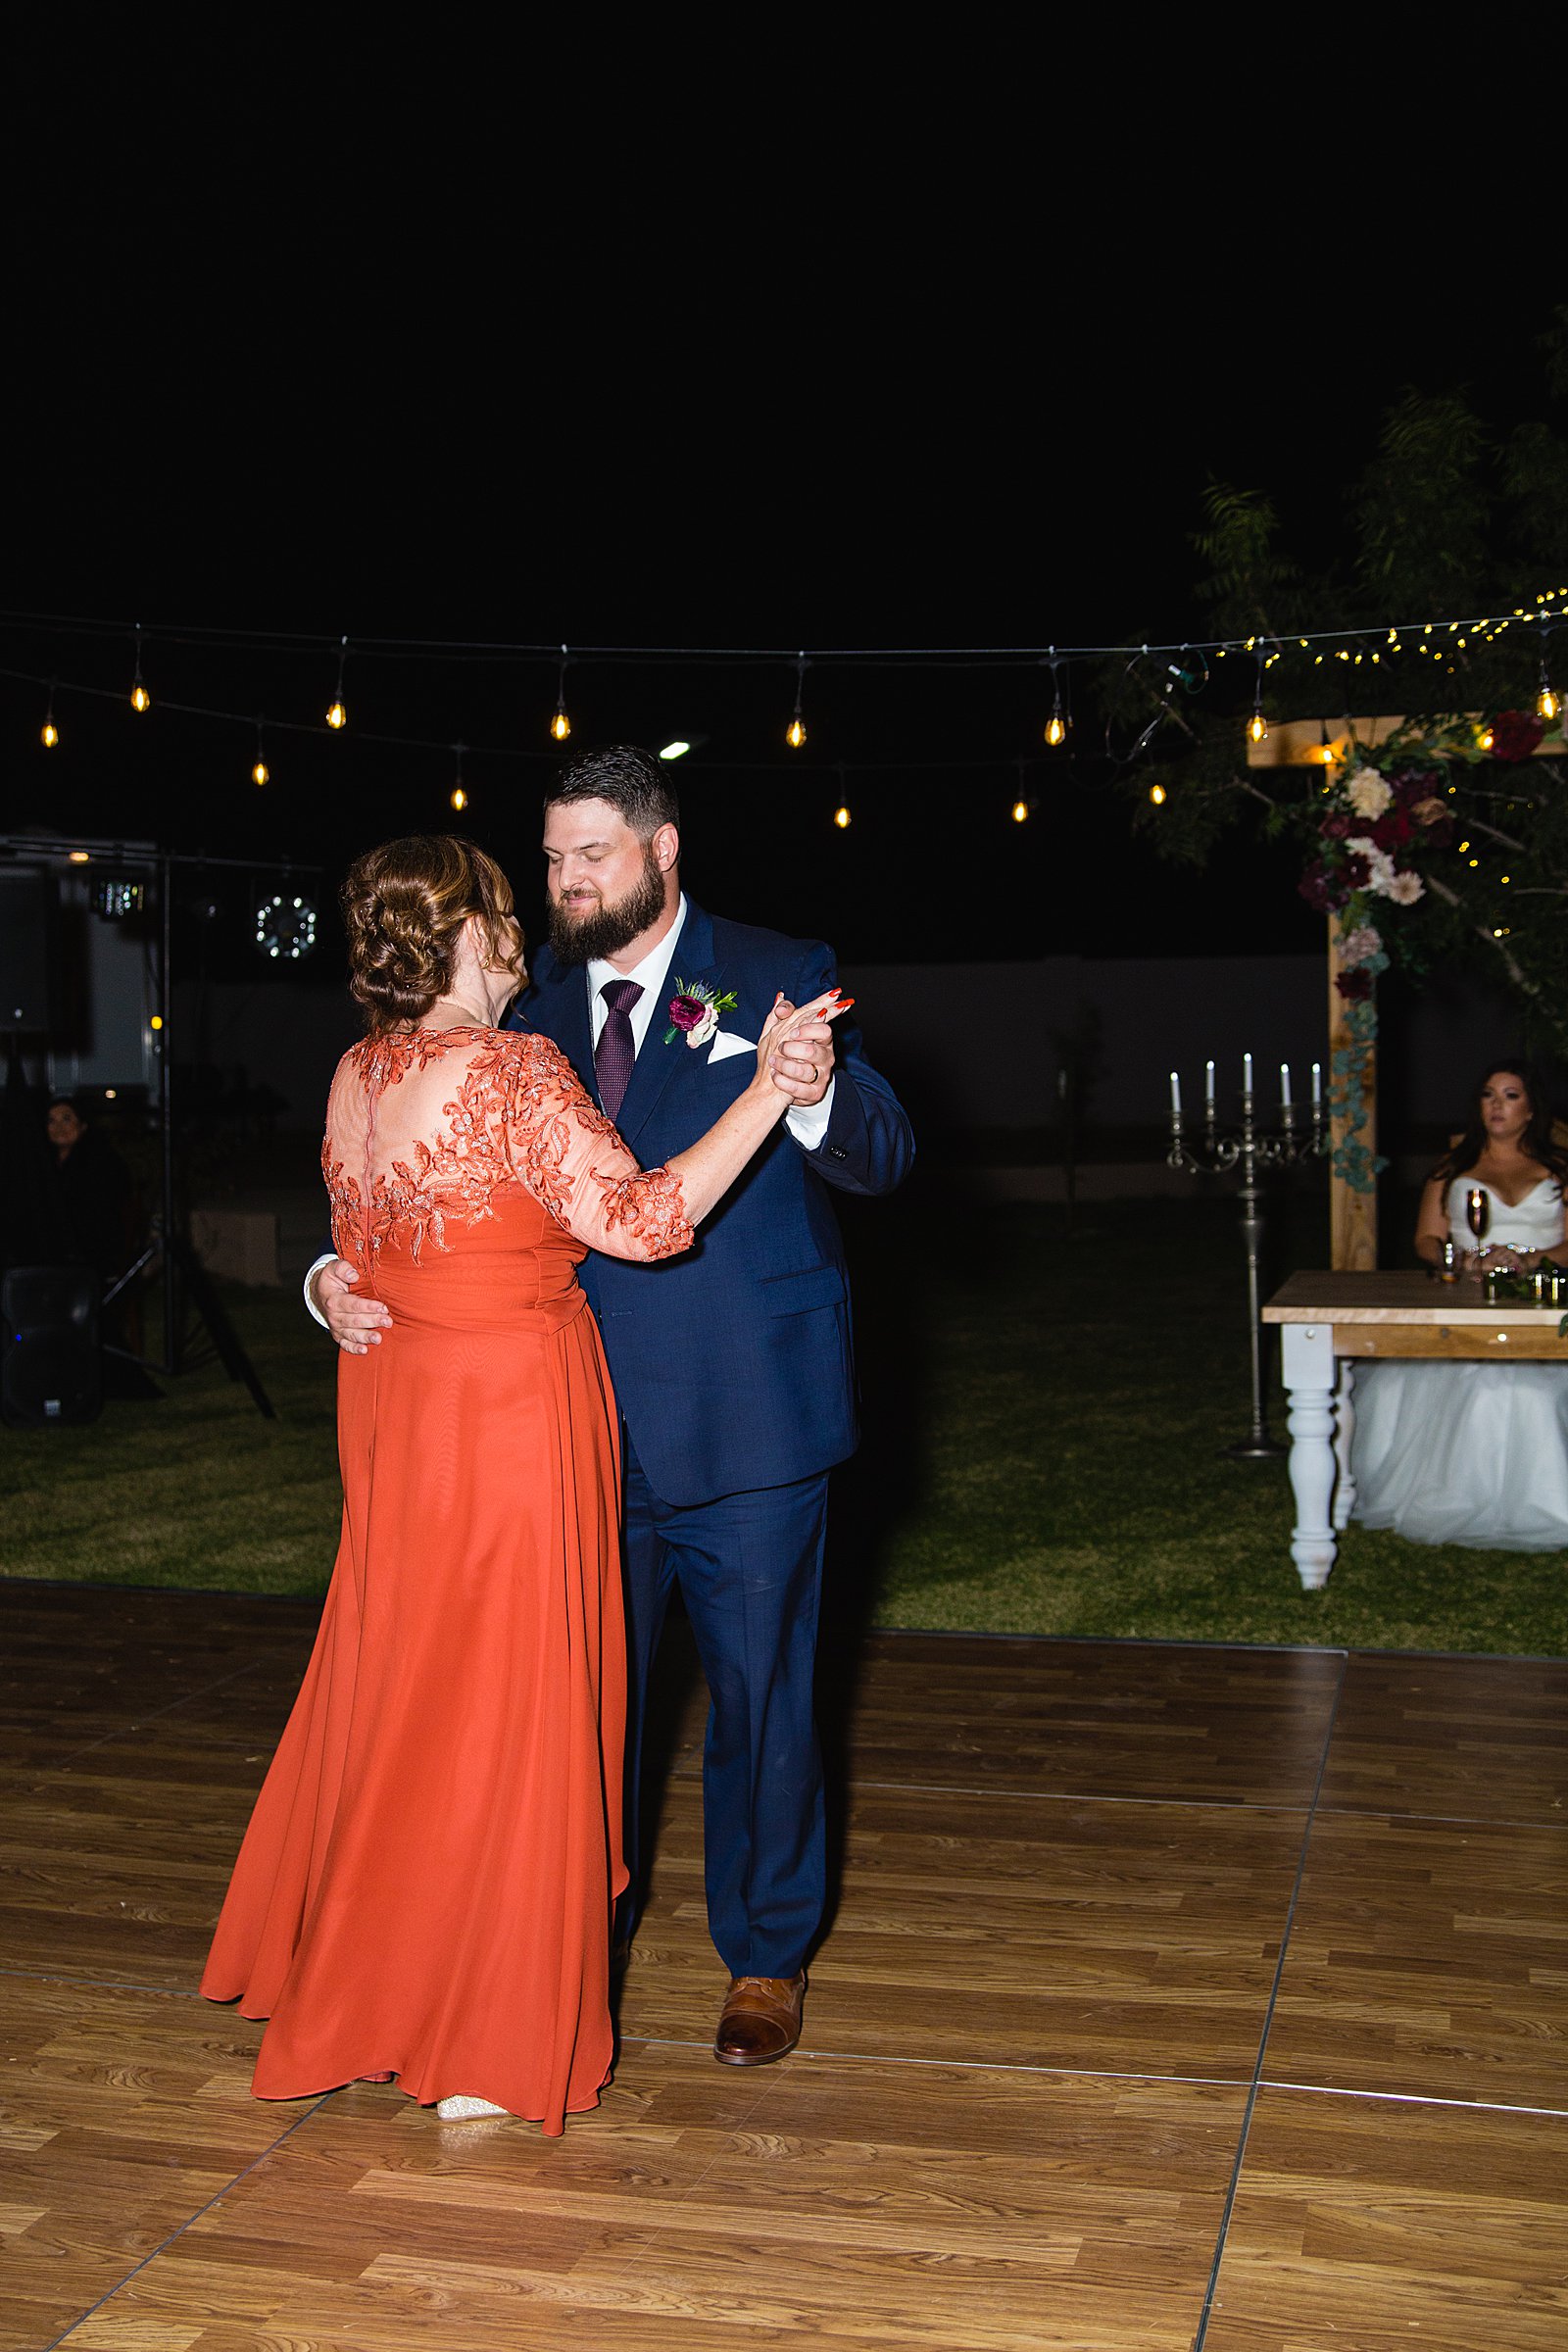 Mother son dance at an Arizona backyard wedding reception by Arizona wedding photographer PMA Photography.